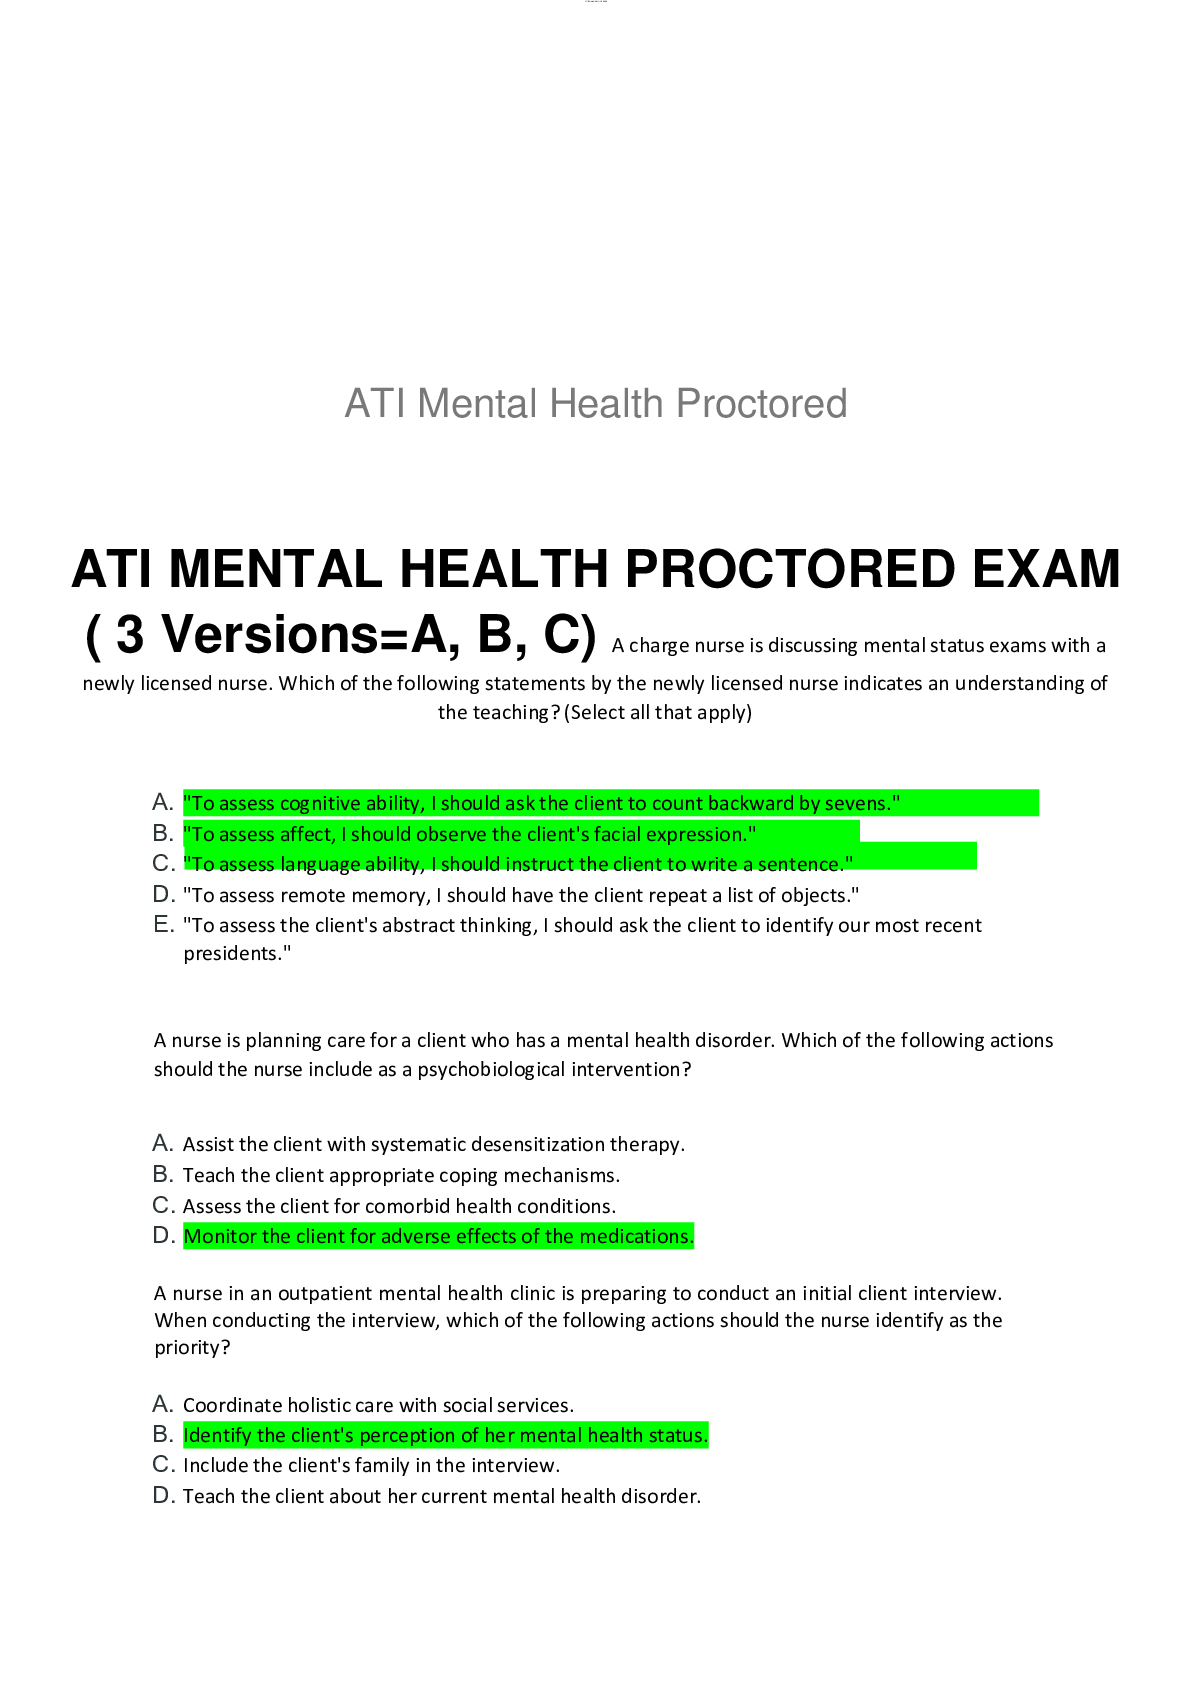 ATI MENTAL HEALTH PROCTORED EXAM ( 3 Versions=A, B, C) Browsegrades